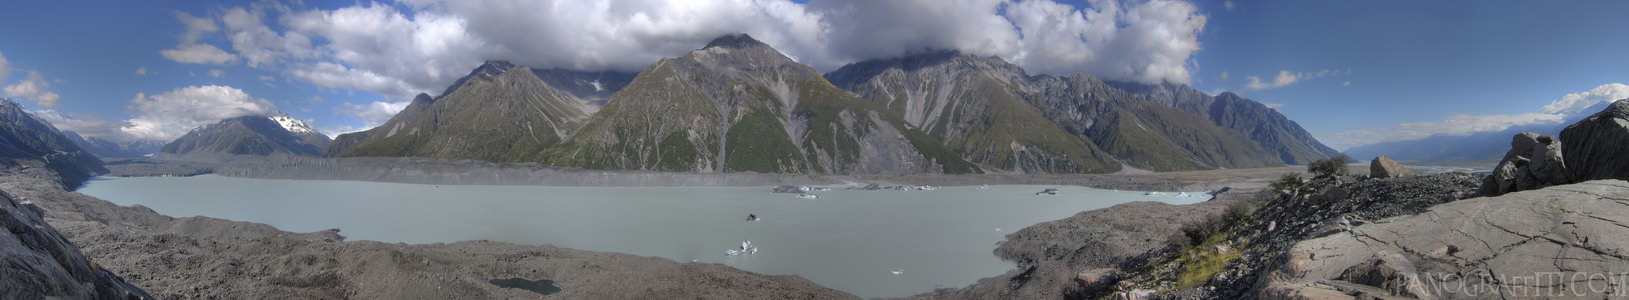 The Nuns Viel Across Tasman Lake HDR - Stitched Panorama